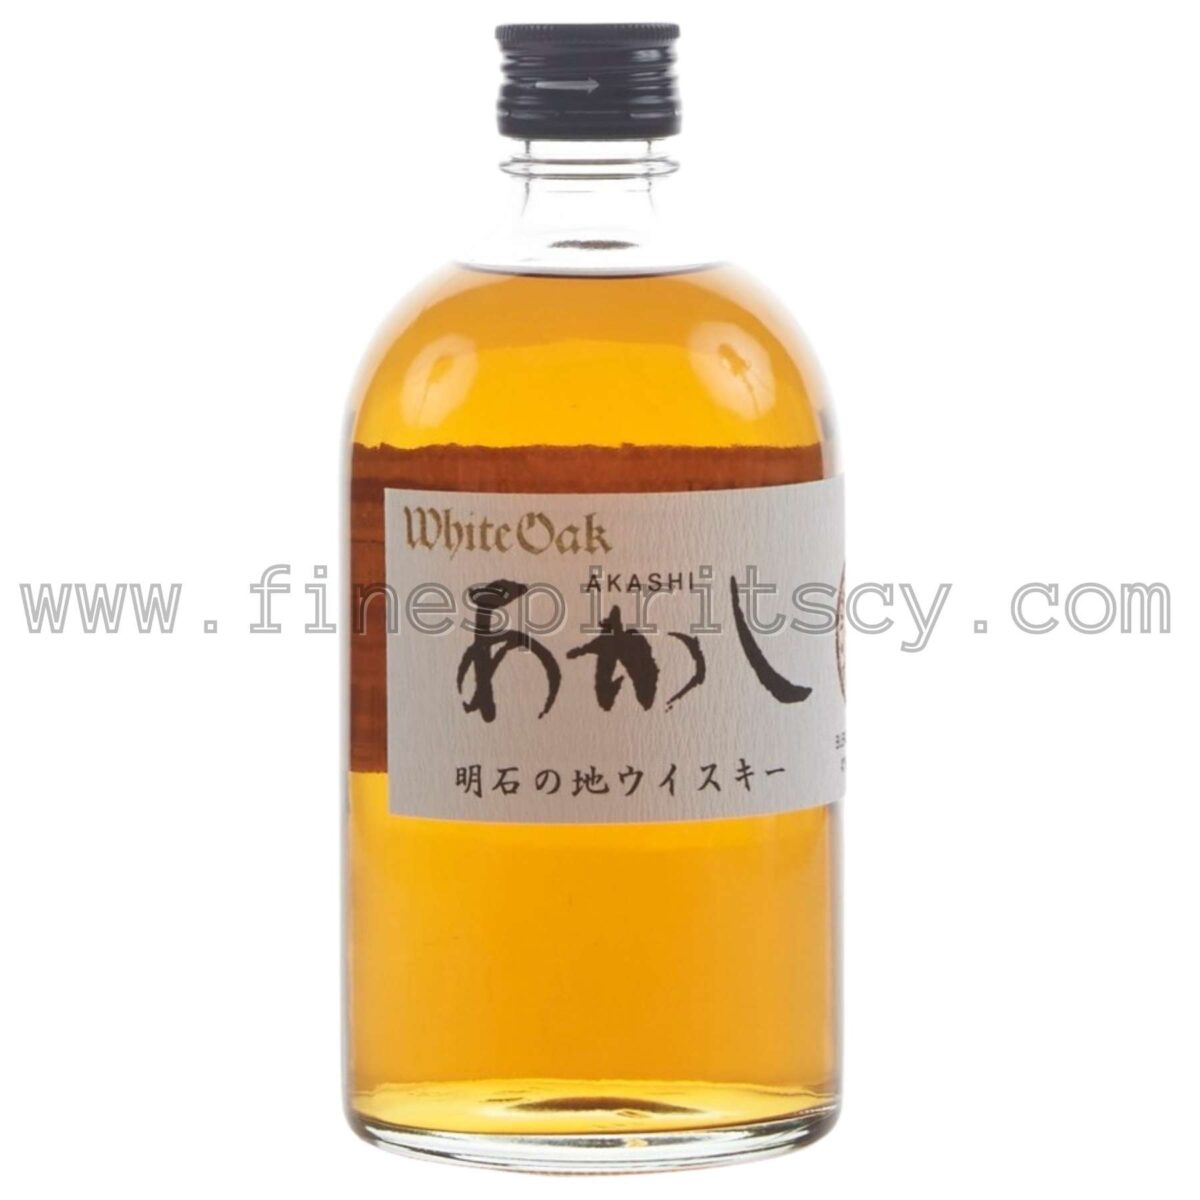 Akashi Japanese Japan Whisky Whiskey White Oak Blended Cyprus Price Fine Spirits CY